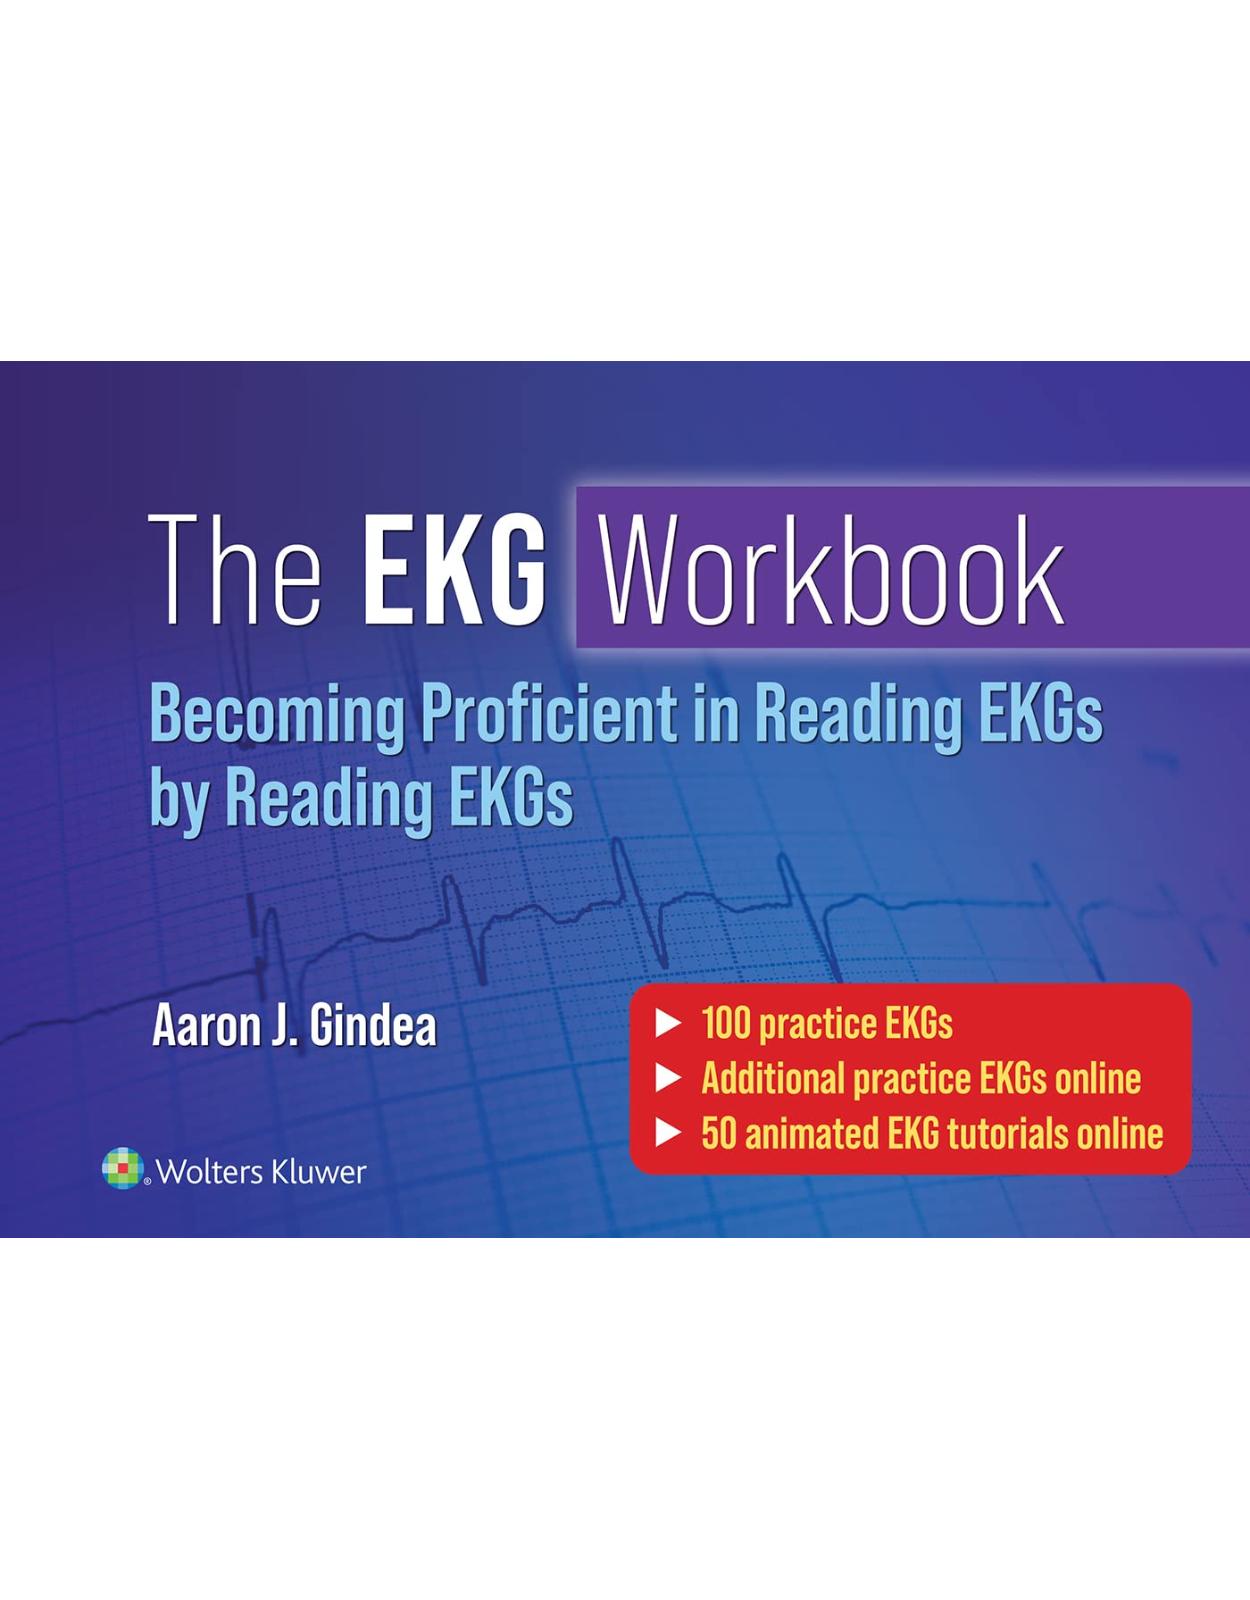 The EKG Workbook: Becoming Proficient in Reading EKGs